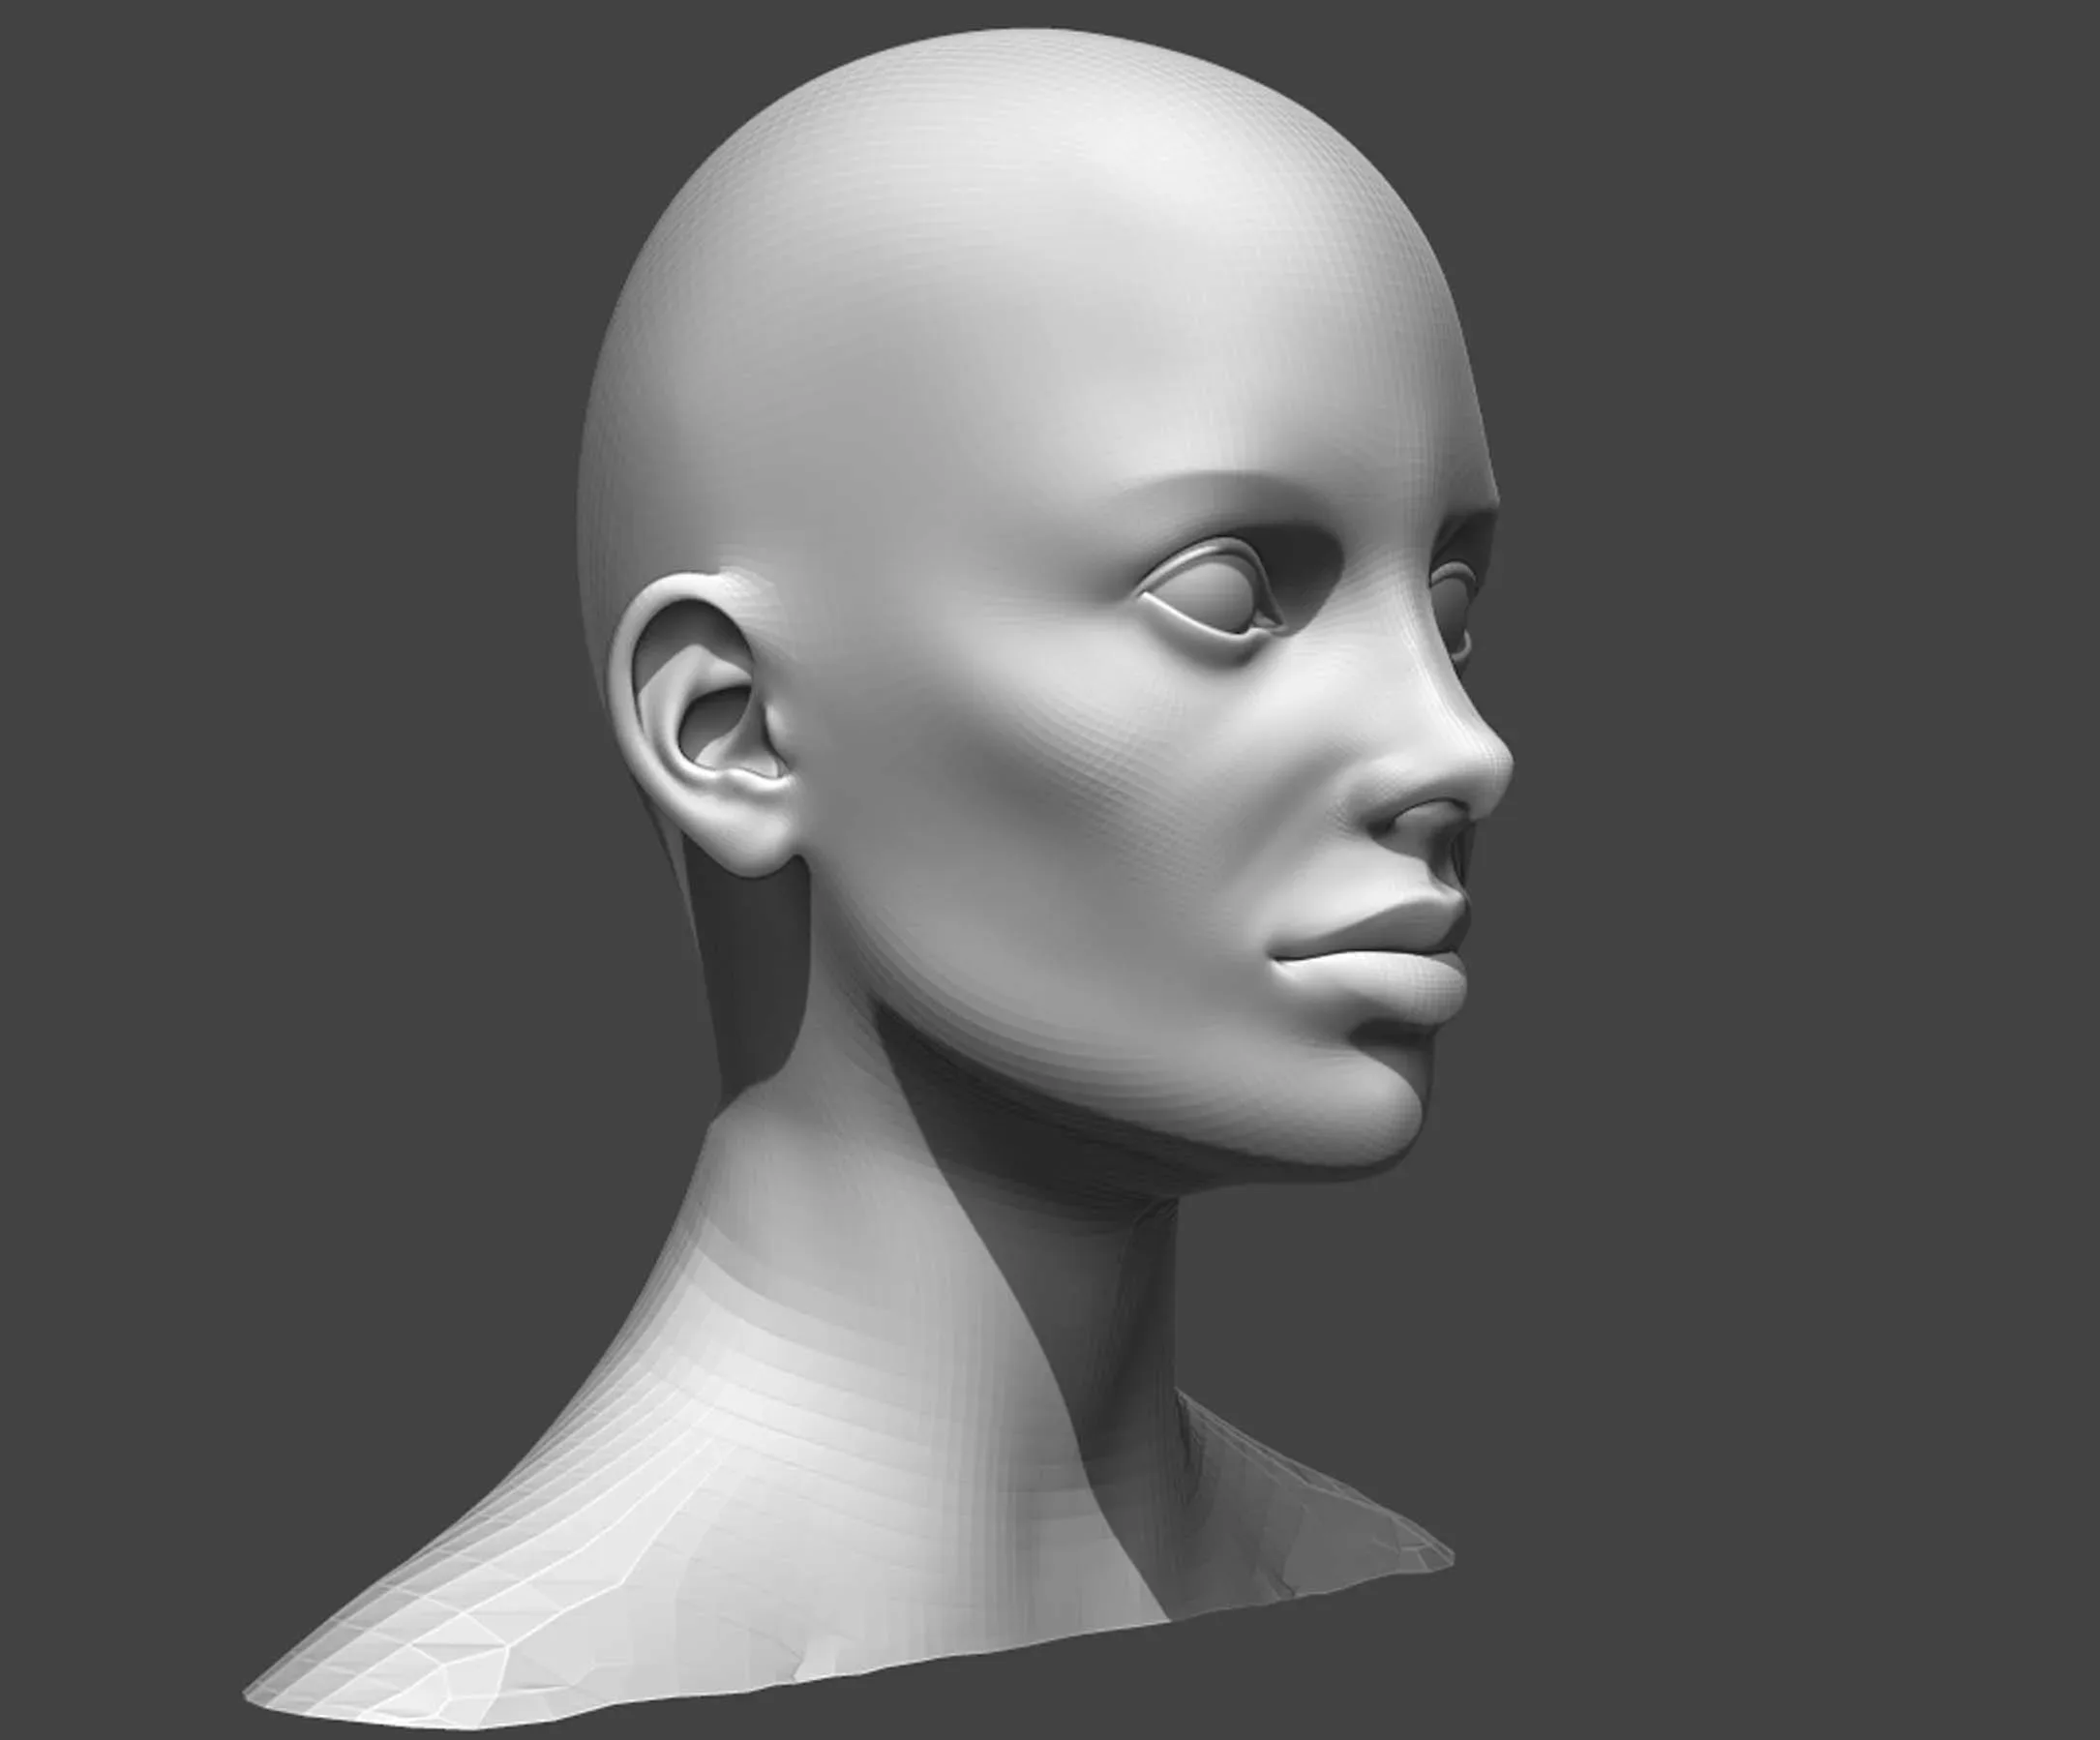 Male and Female Head Realistic Base Mesh #2 3d Model